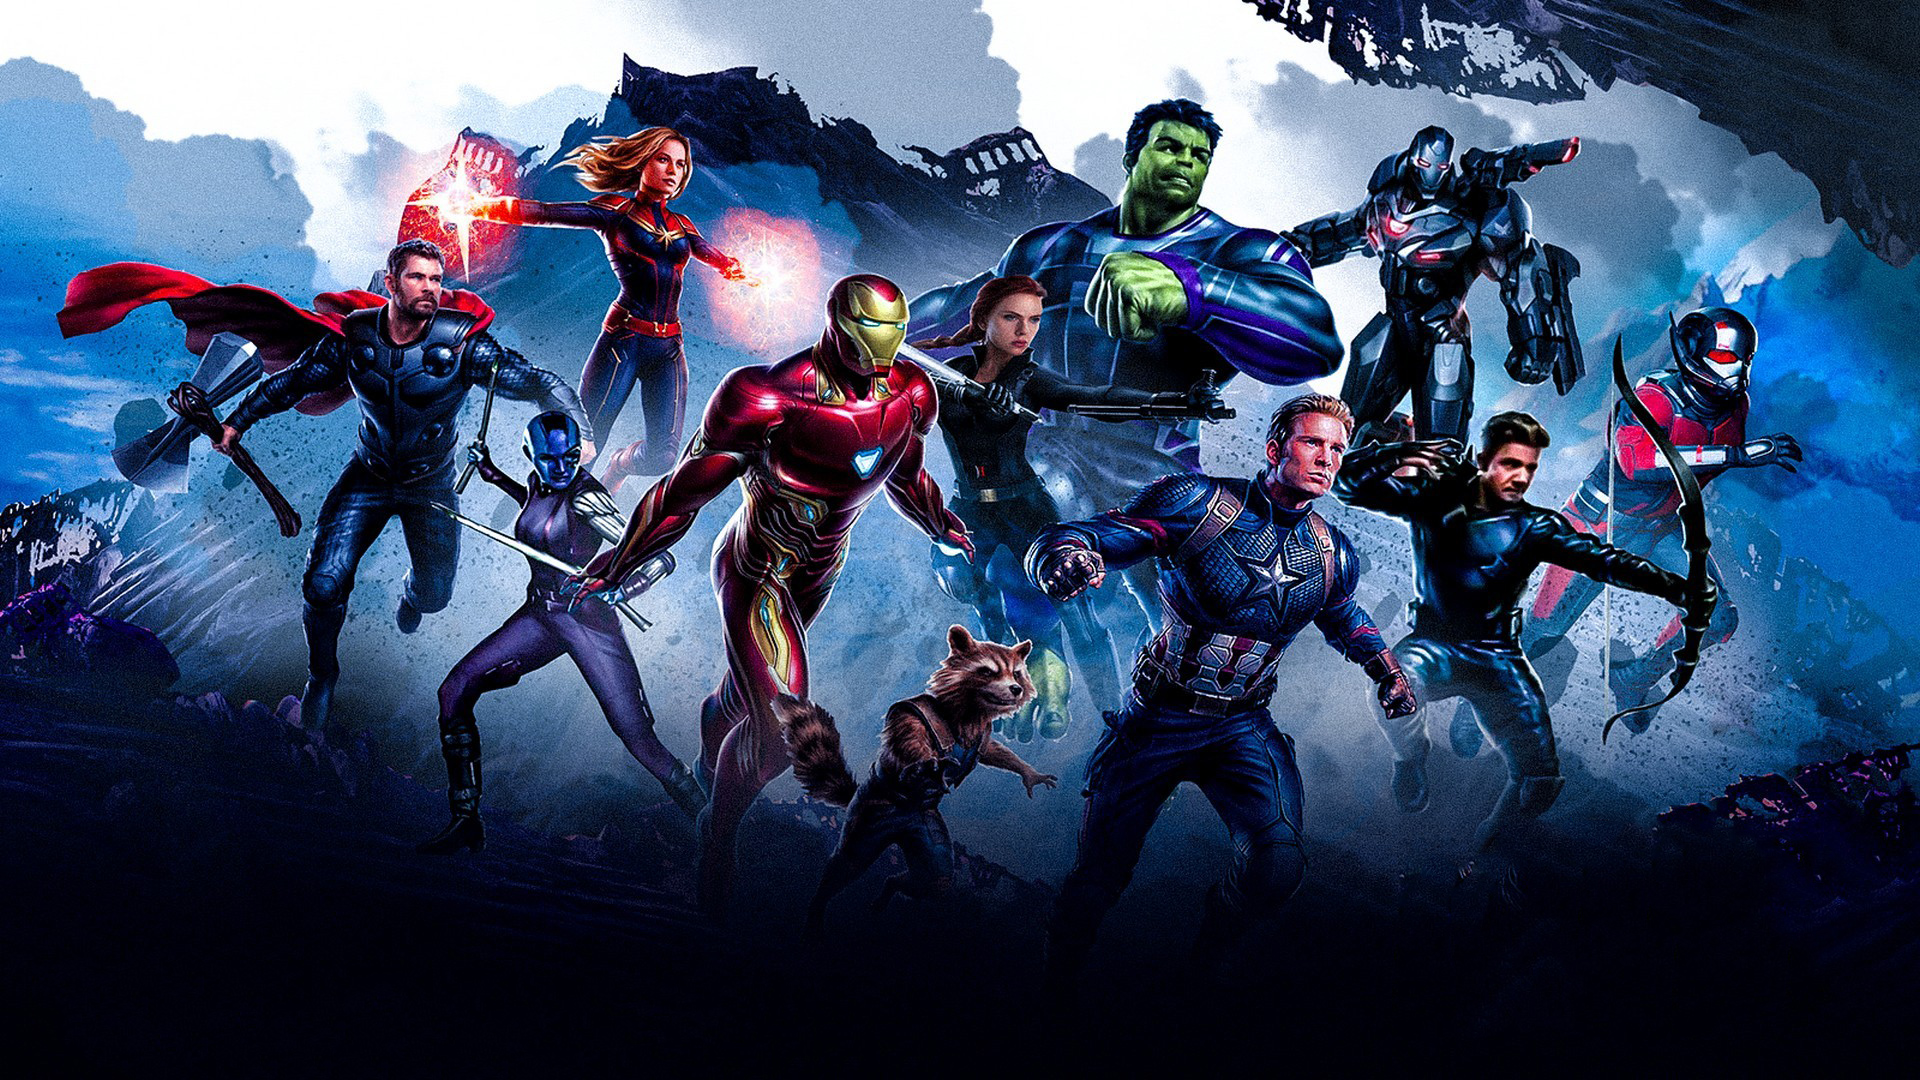 Avengers Endgame HD Wallpaper Background Image 1920x1080 ID